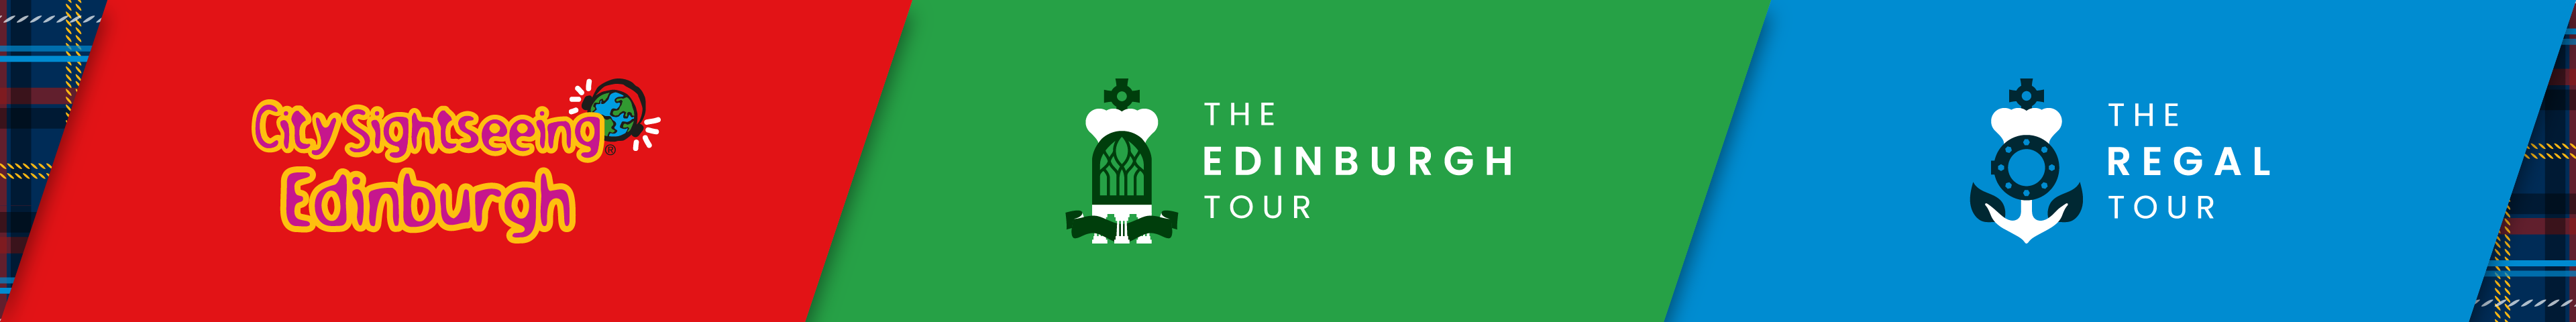 CitySightseeing Edinburgh, The Edinburgh Tour & The Regal Tour